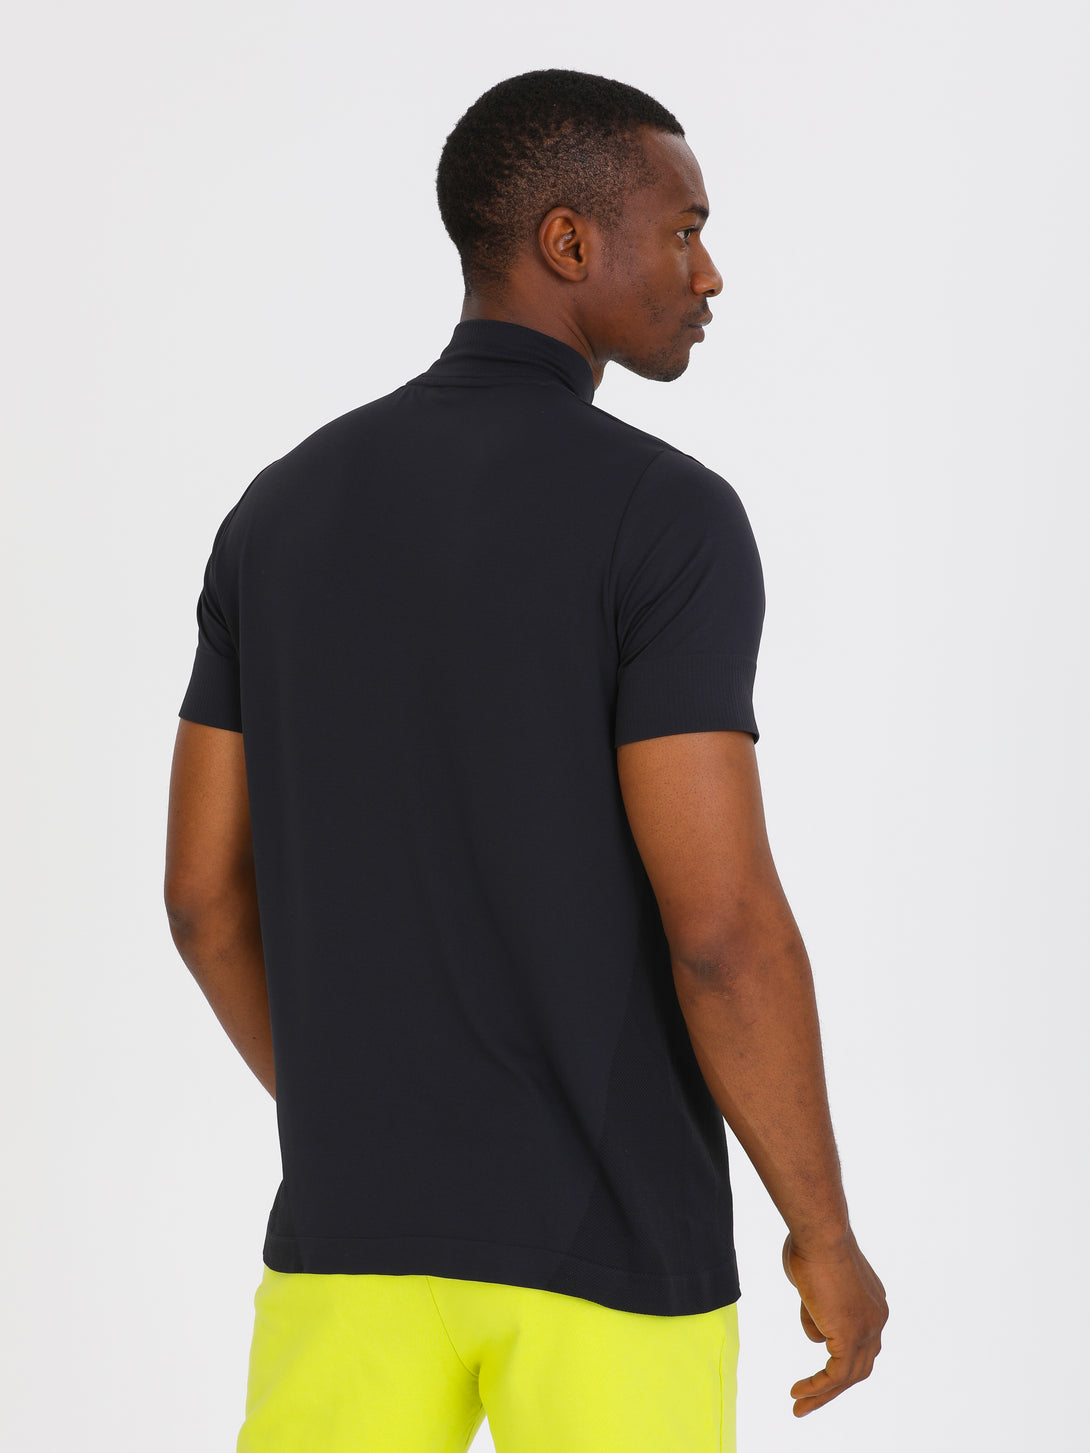 A Man Wearing Black Color Seamless Short Sleeve Zipped T-Shirt